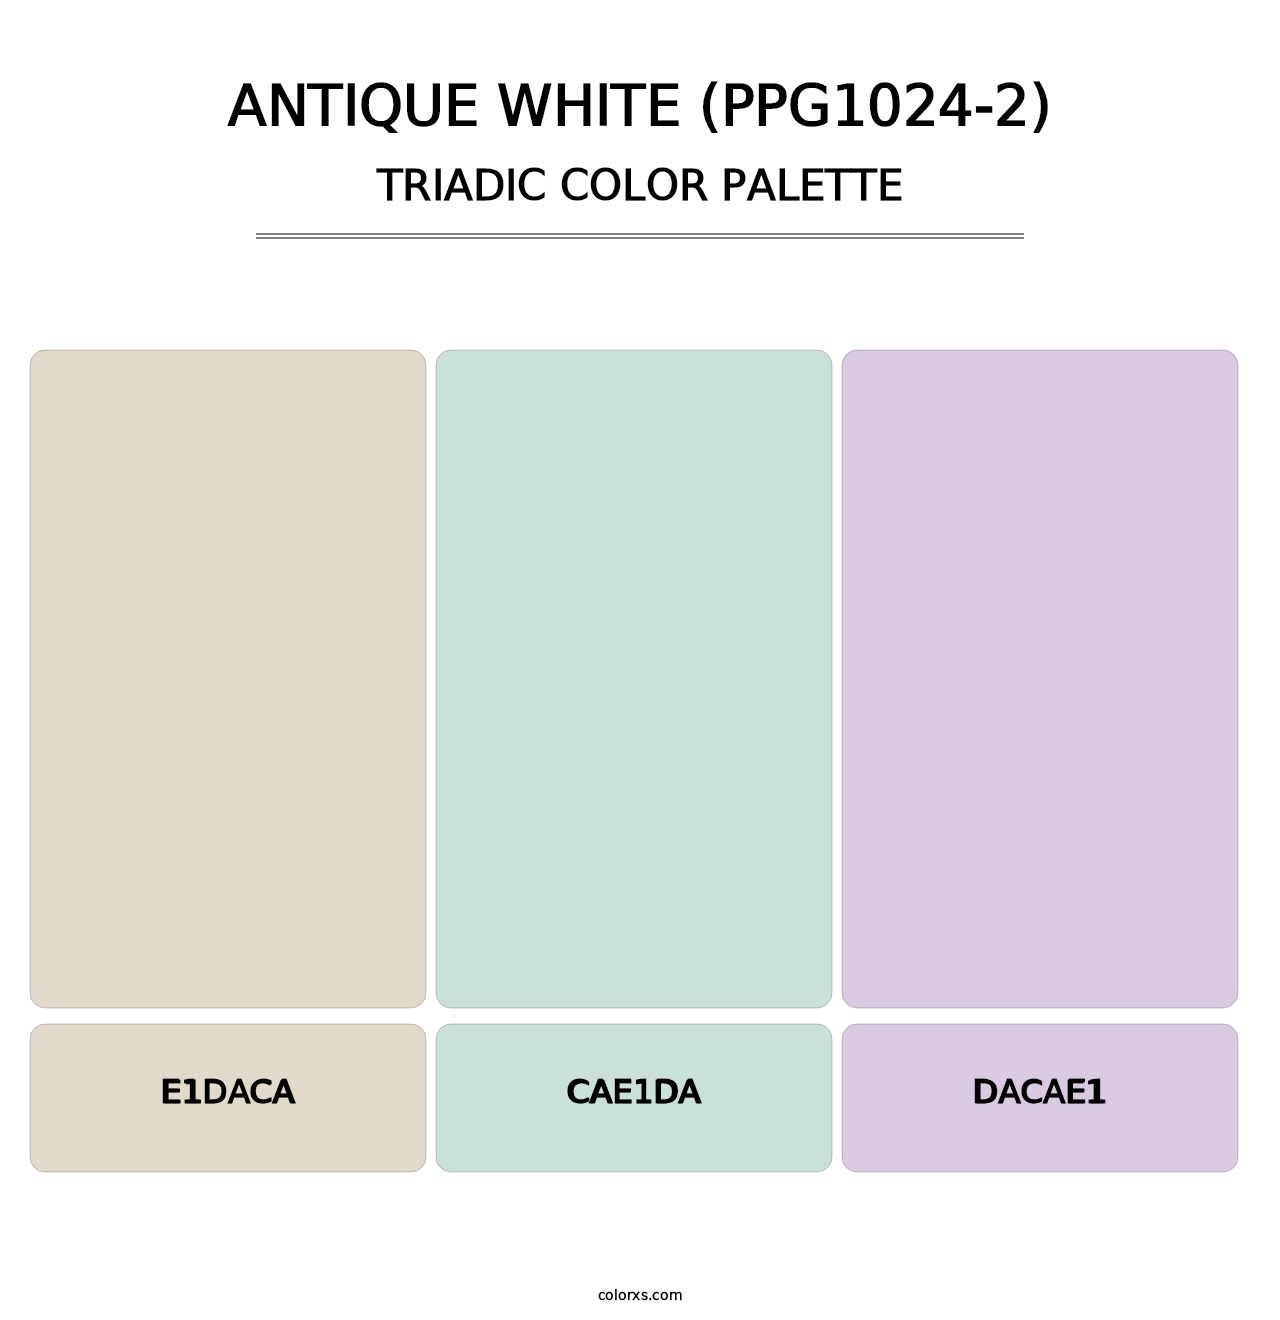 Antique White (PPG1024-2) - Triadic Color Palette